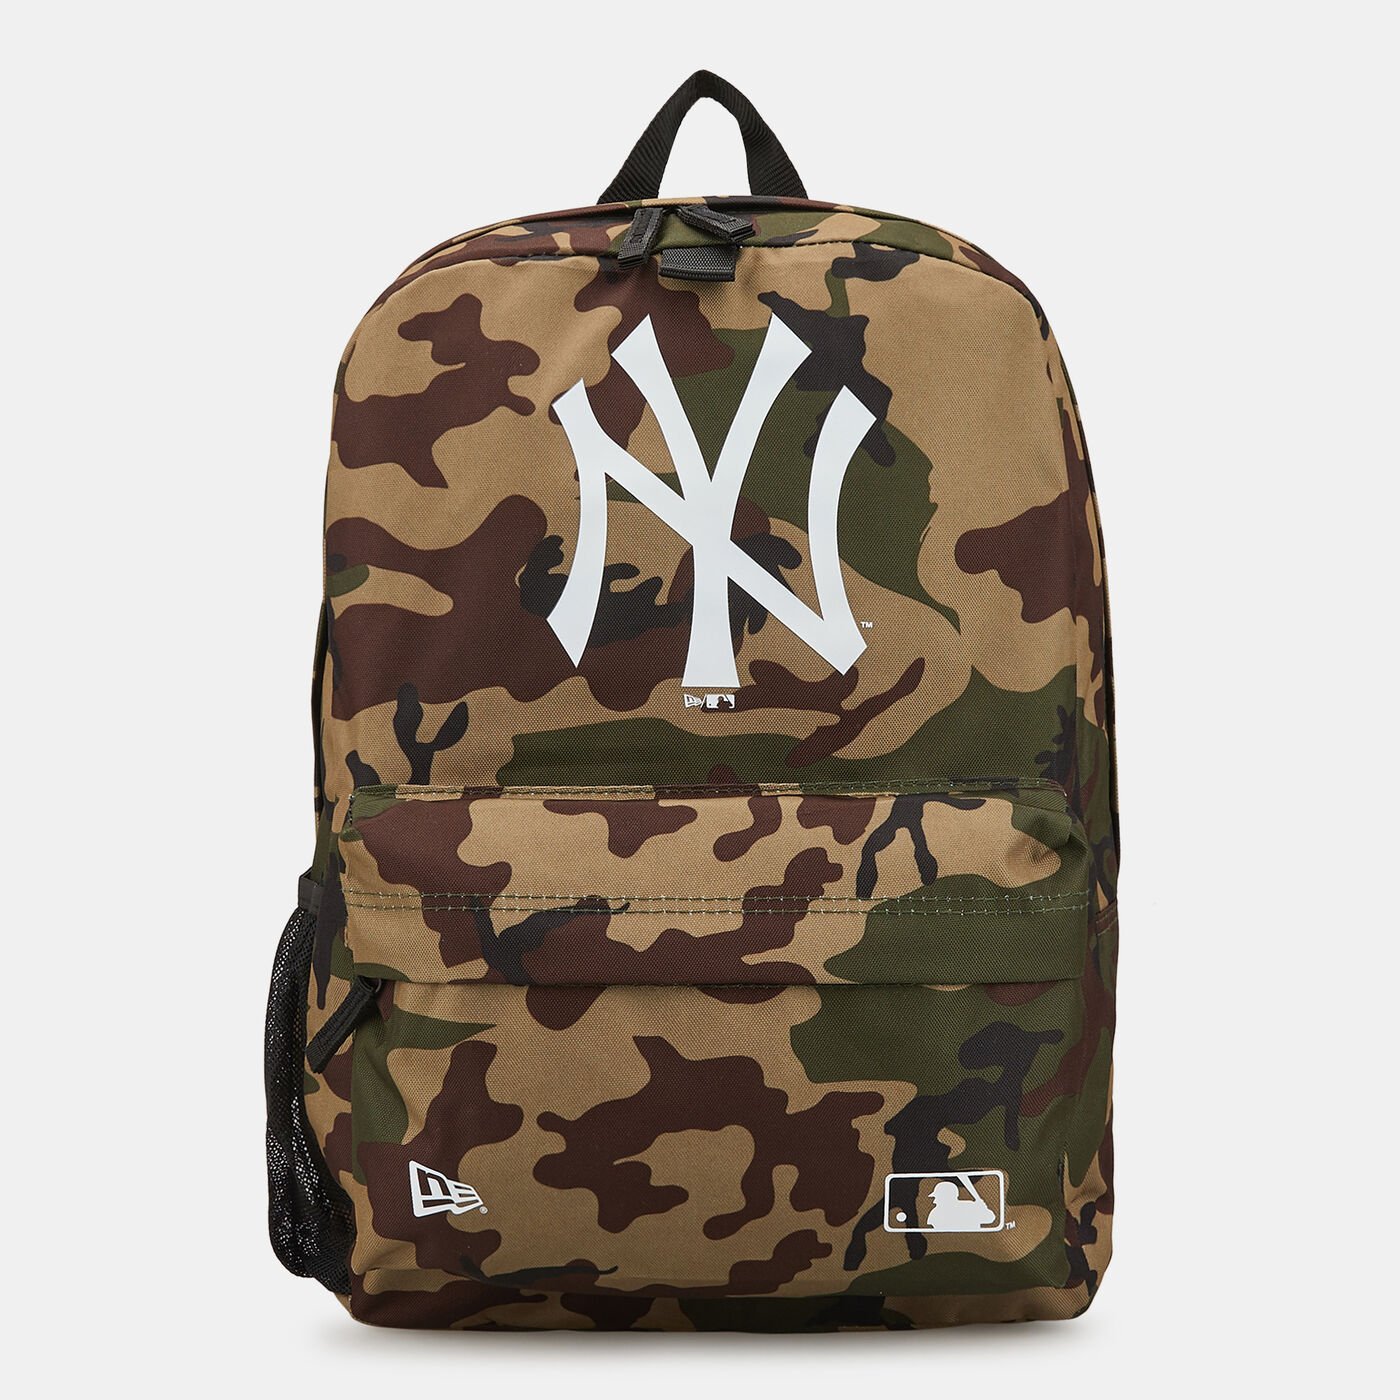 MLB Stadium New York Yankees Backpack